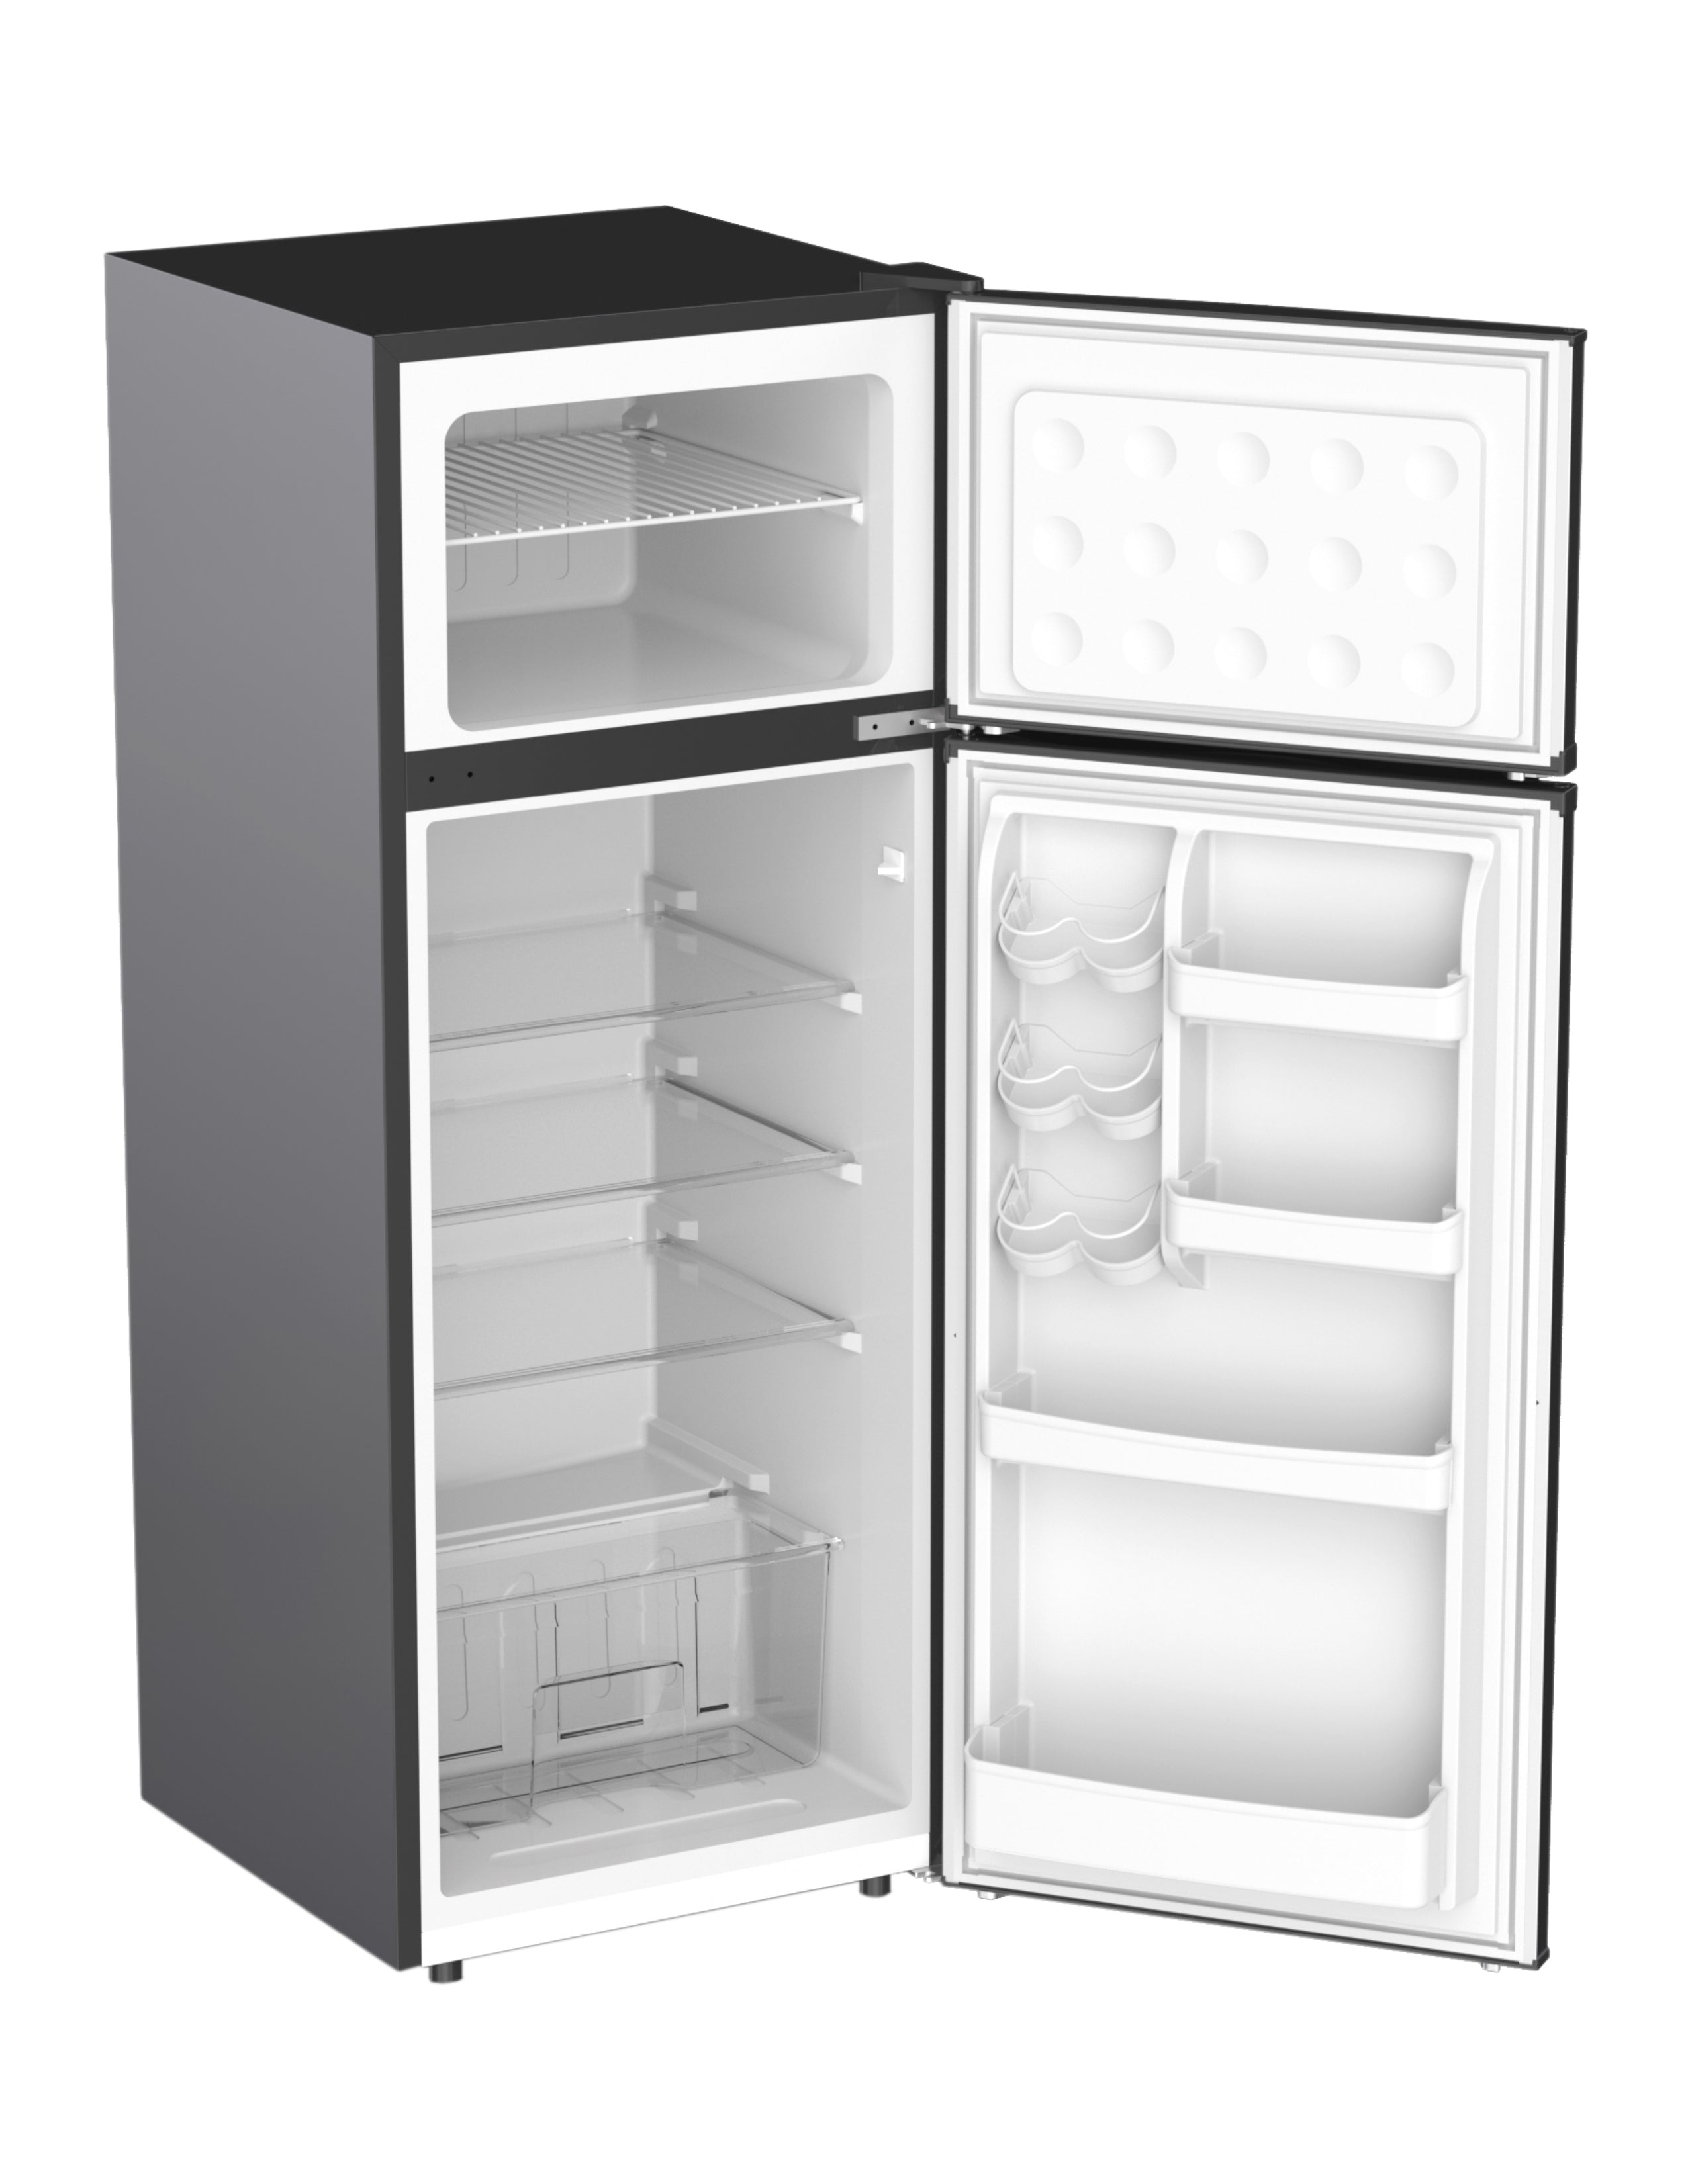 RMF-212B/ 7.5 Cu.ft Top-Freezer Refrigerator